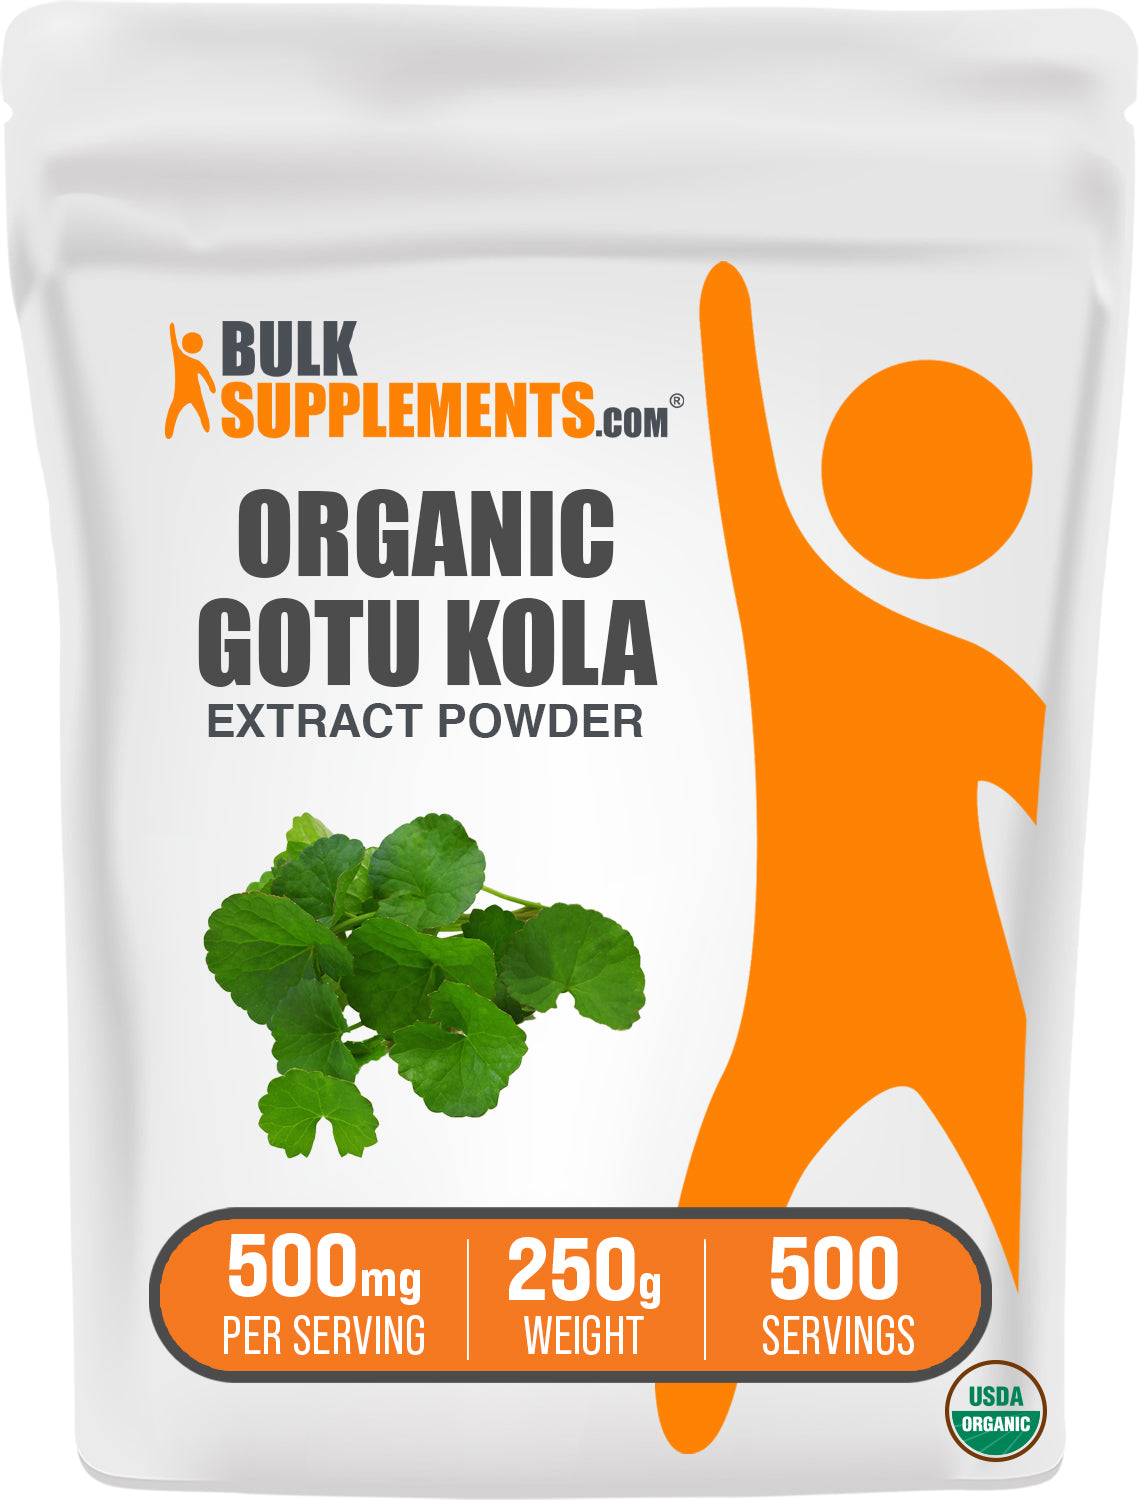 BulkSupplements.com organic gotu kola extract powder 250g bag